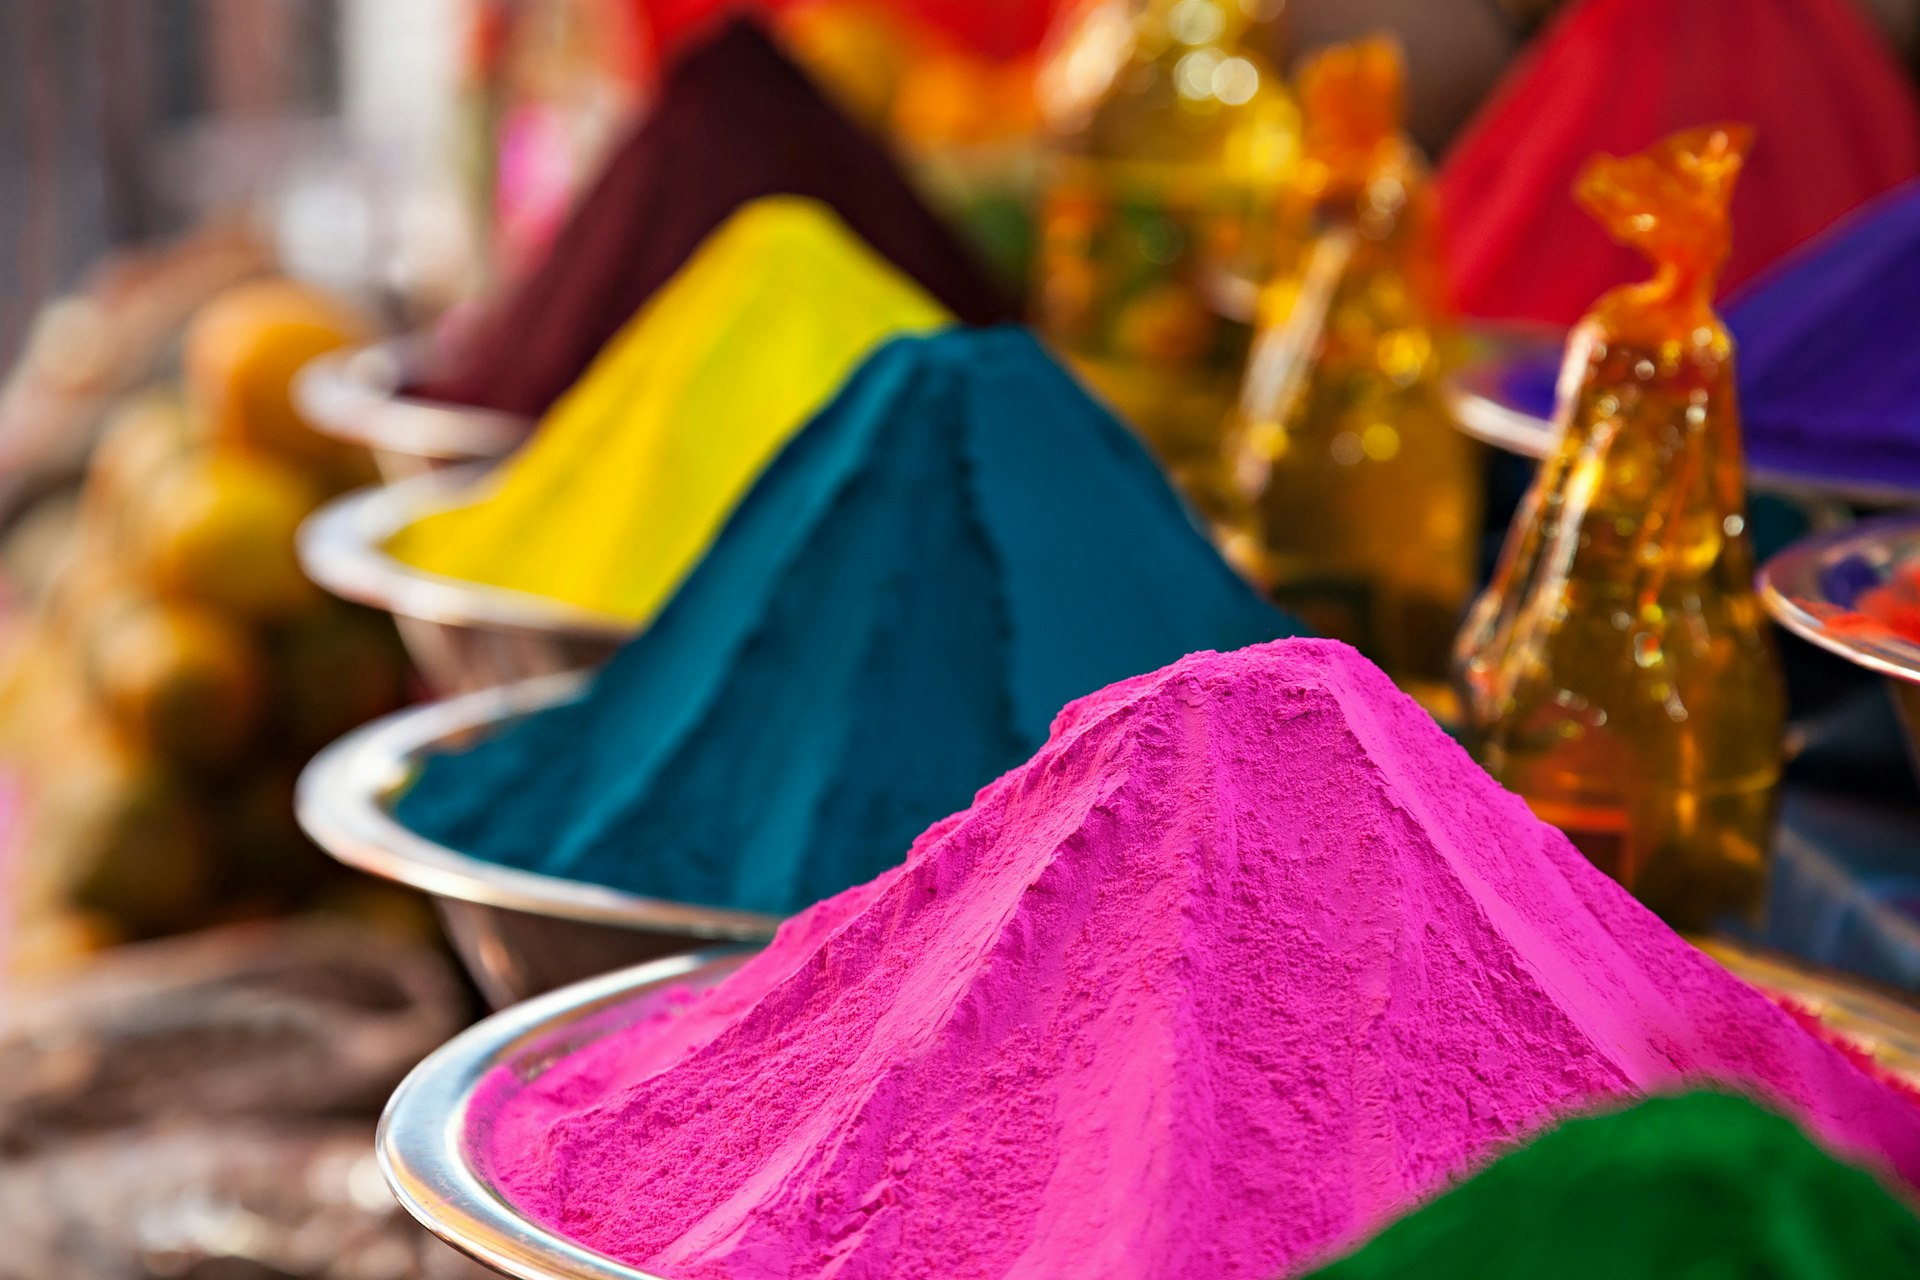 Coloured powder on display at Delhi's Spice Market